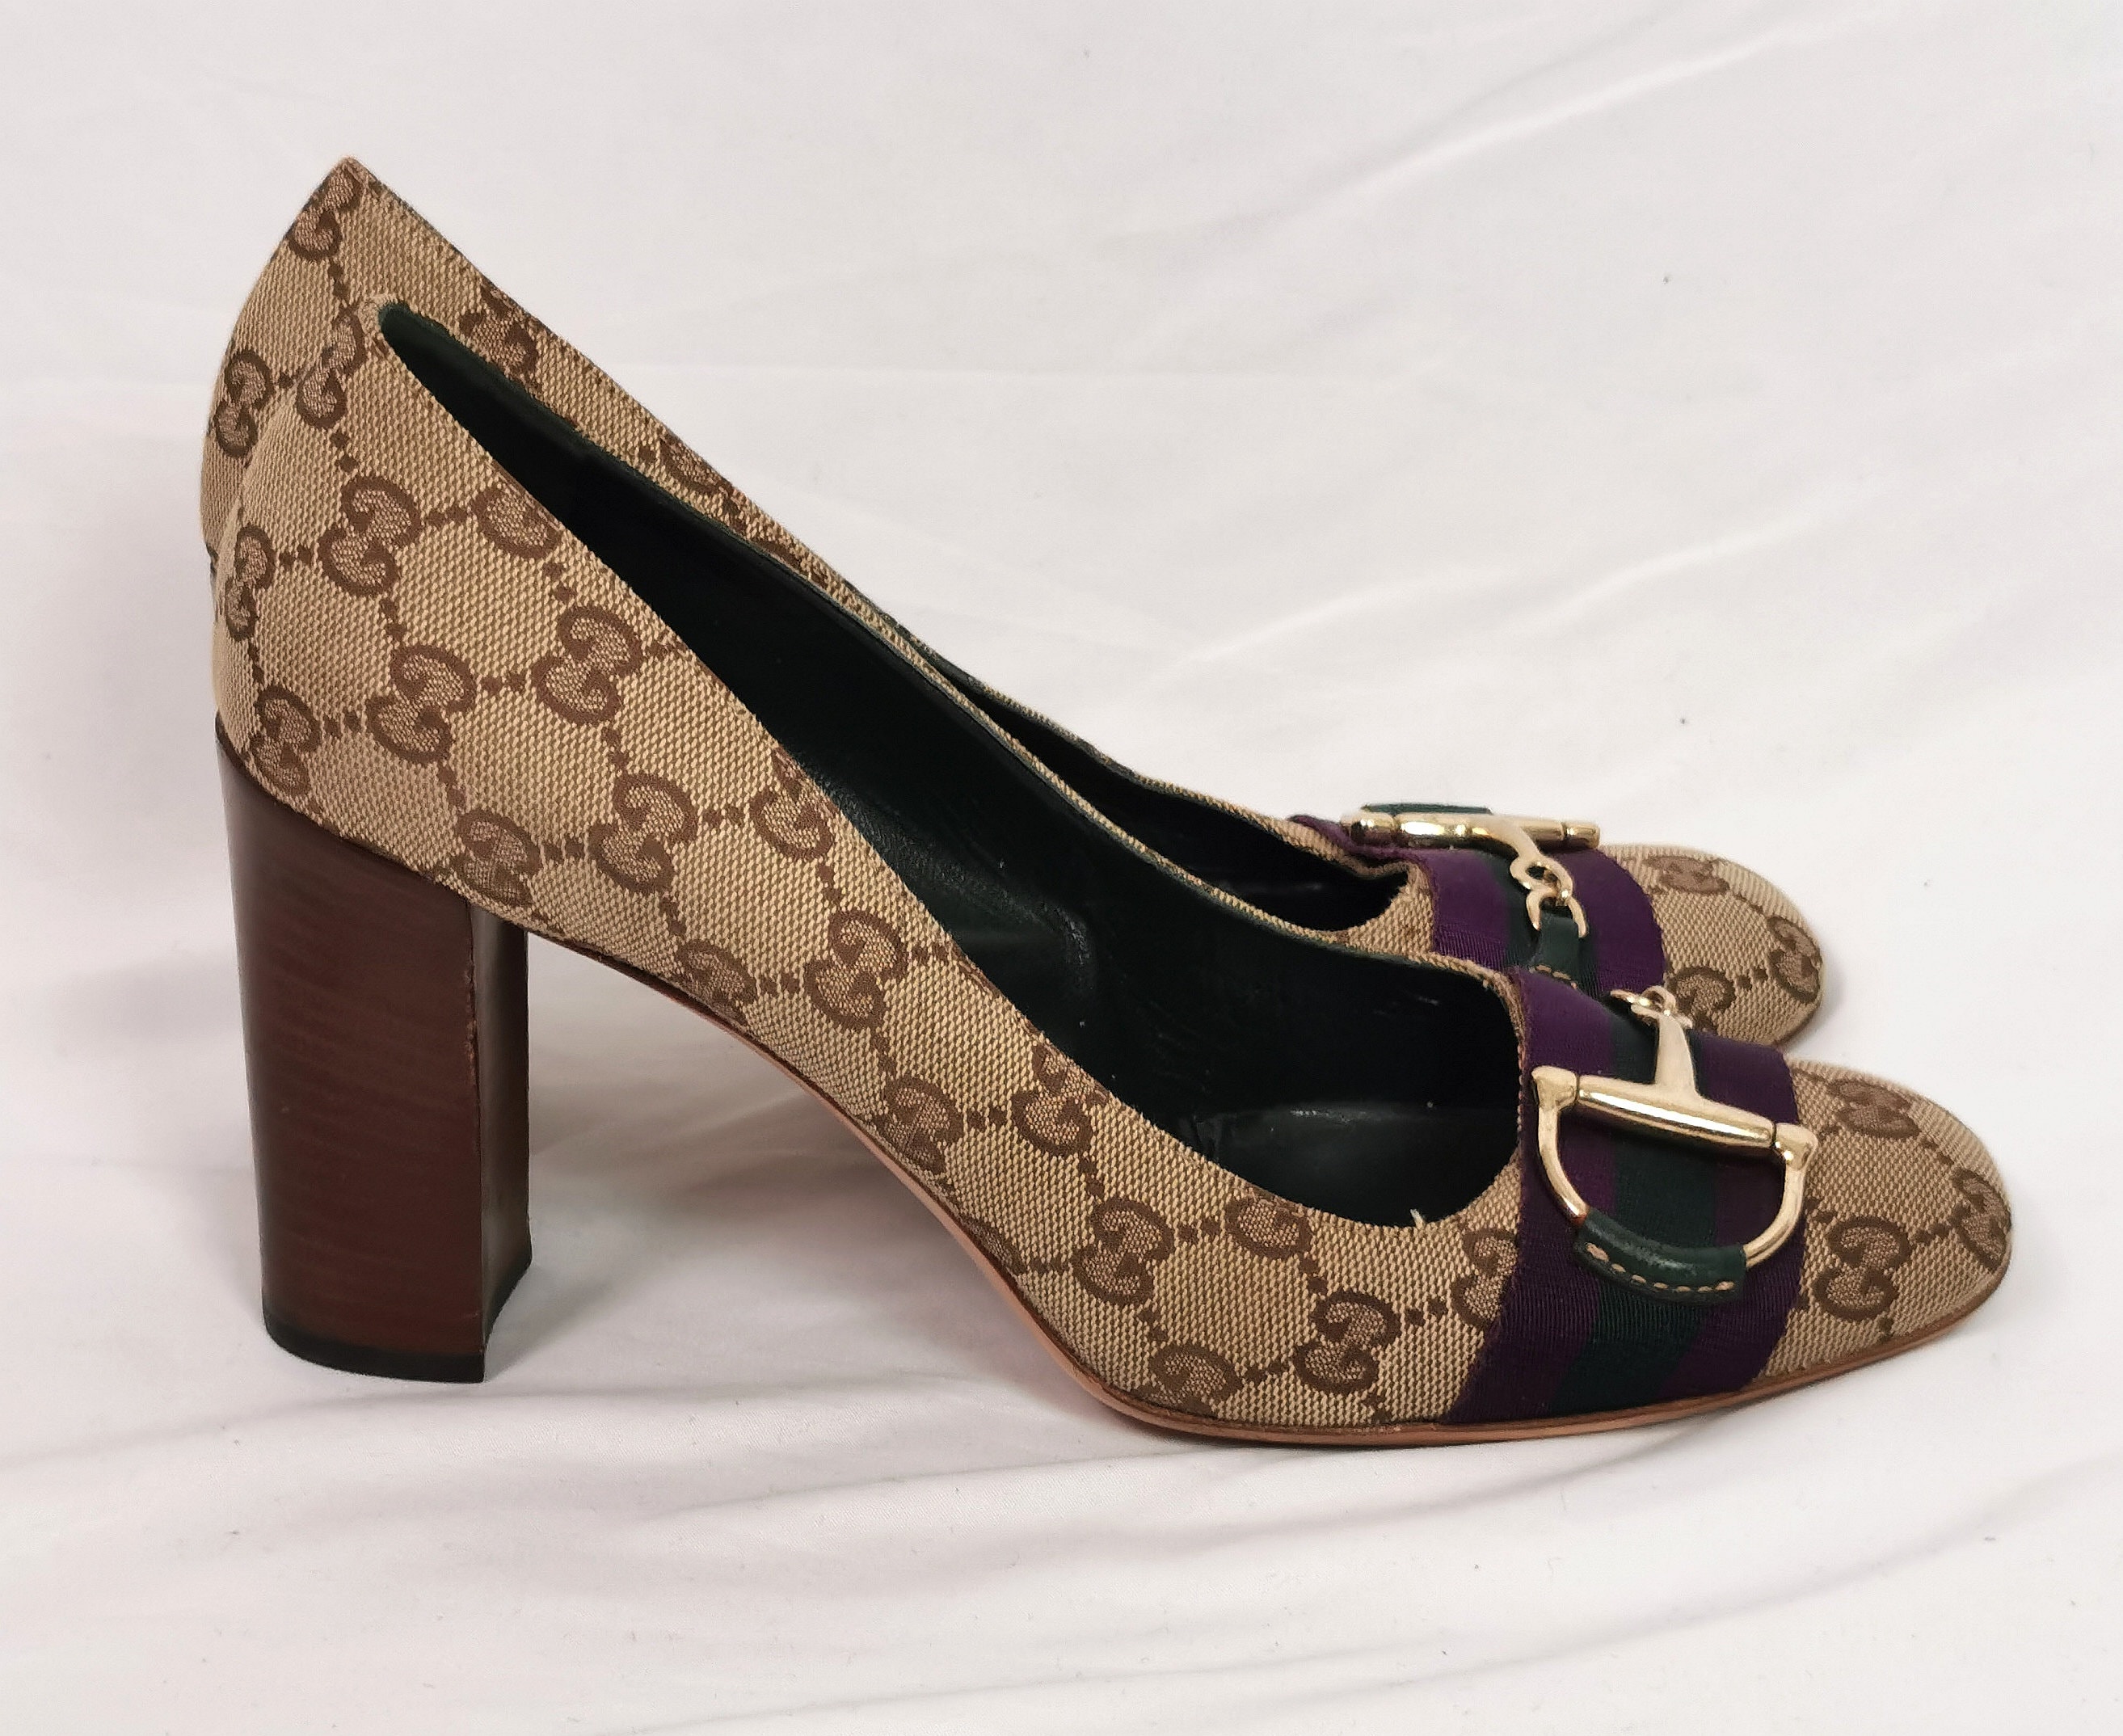 Gucci Sandals for Women - Shop on FARFETCH